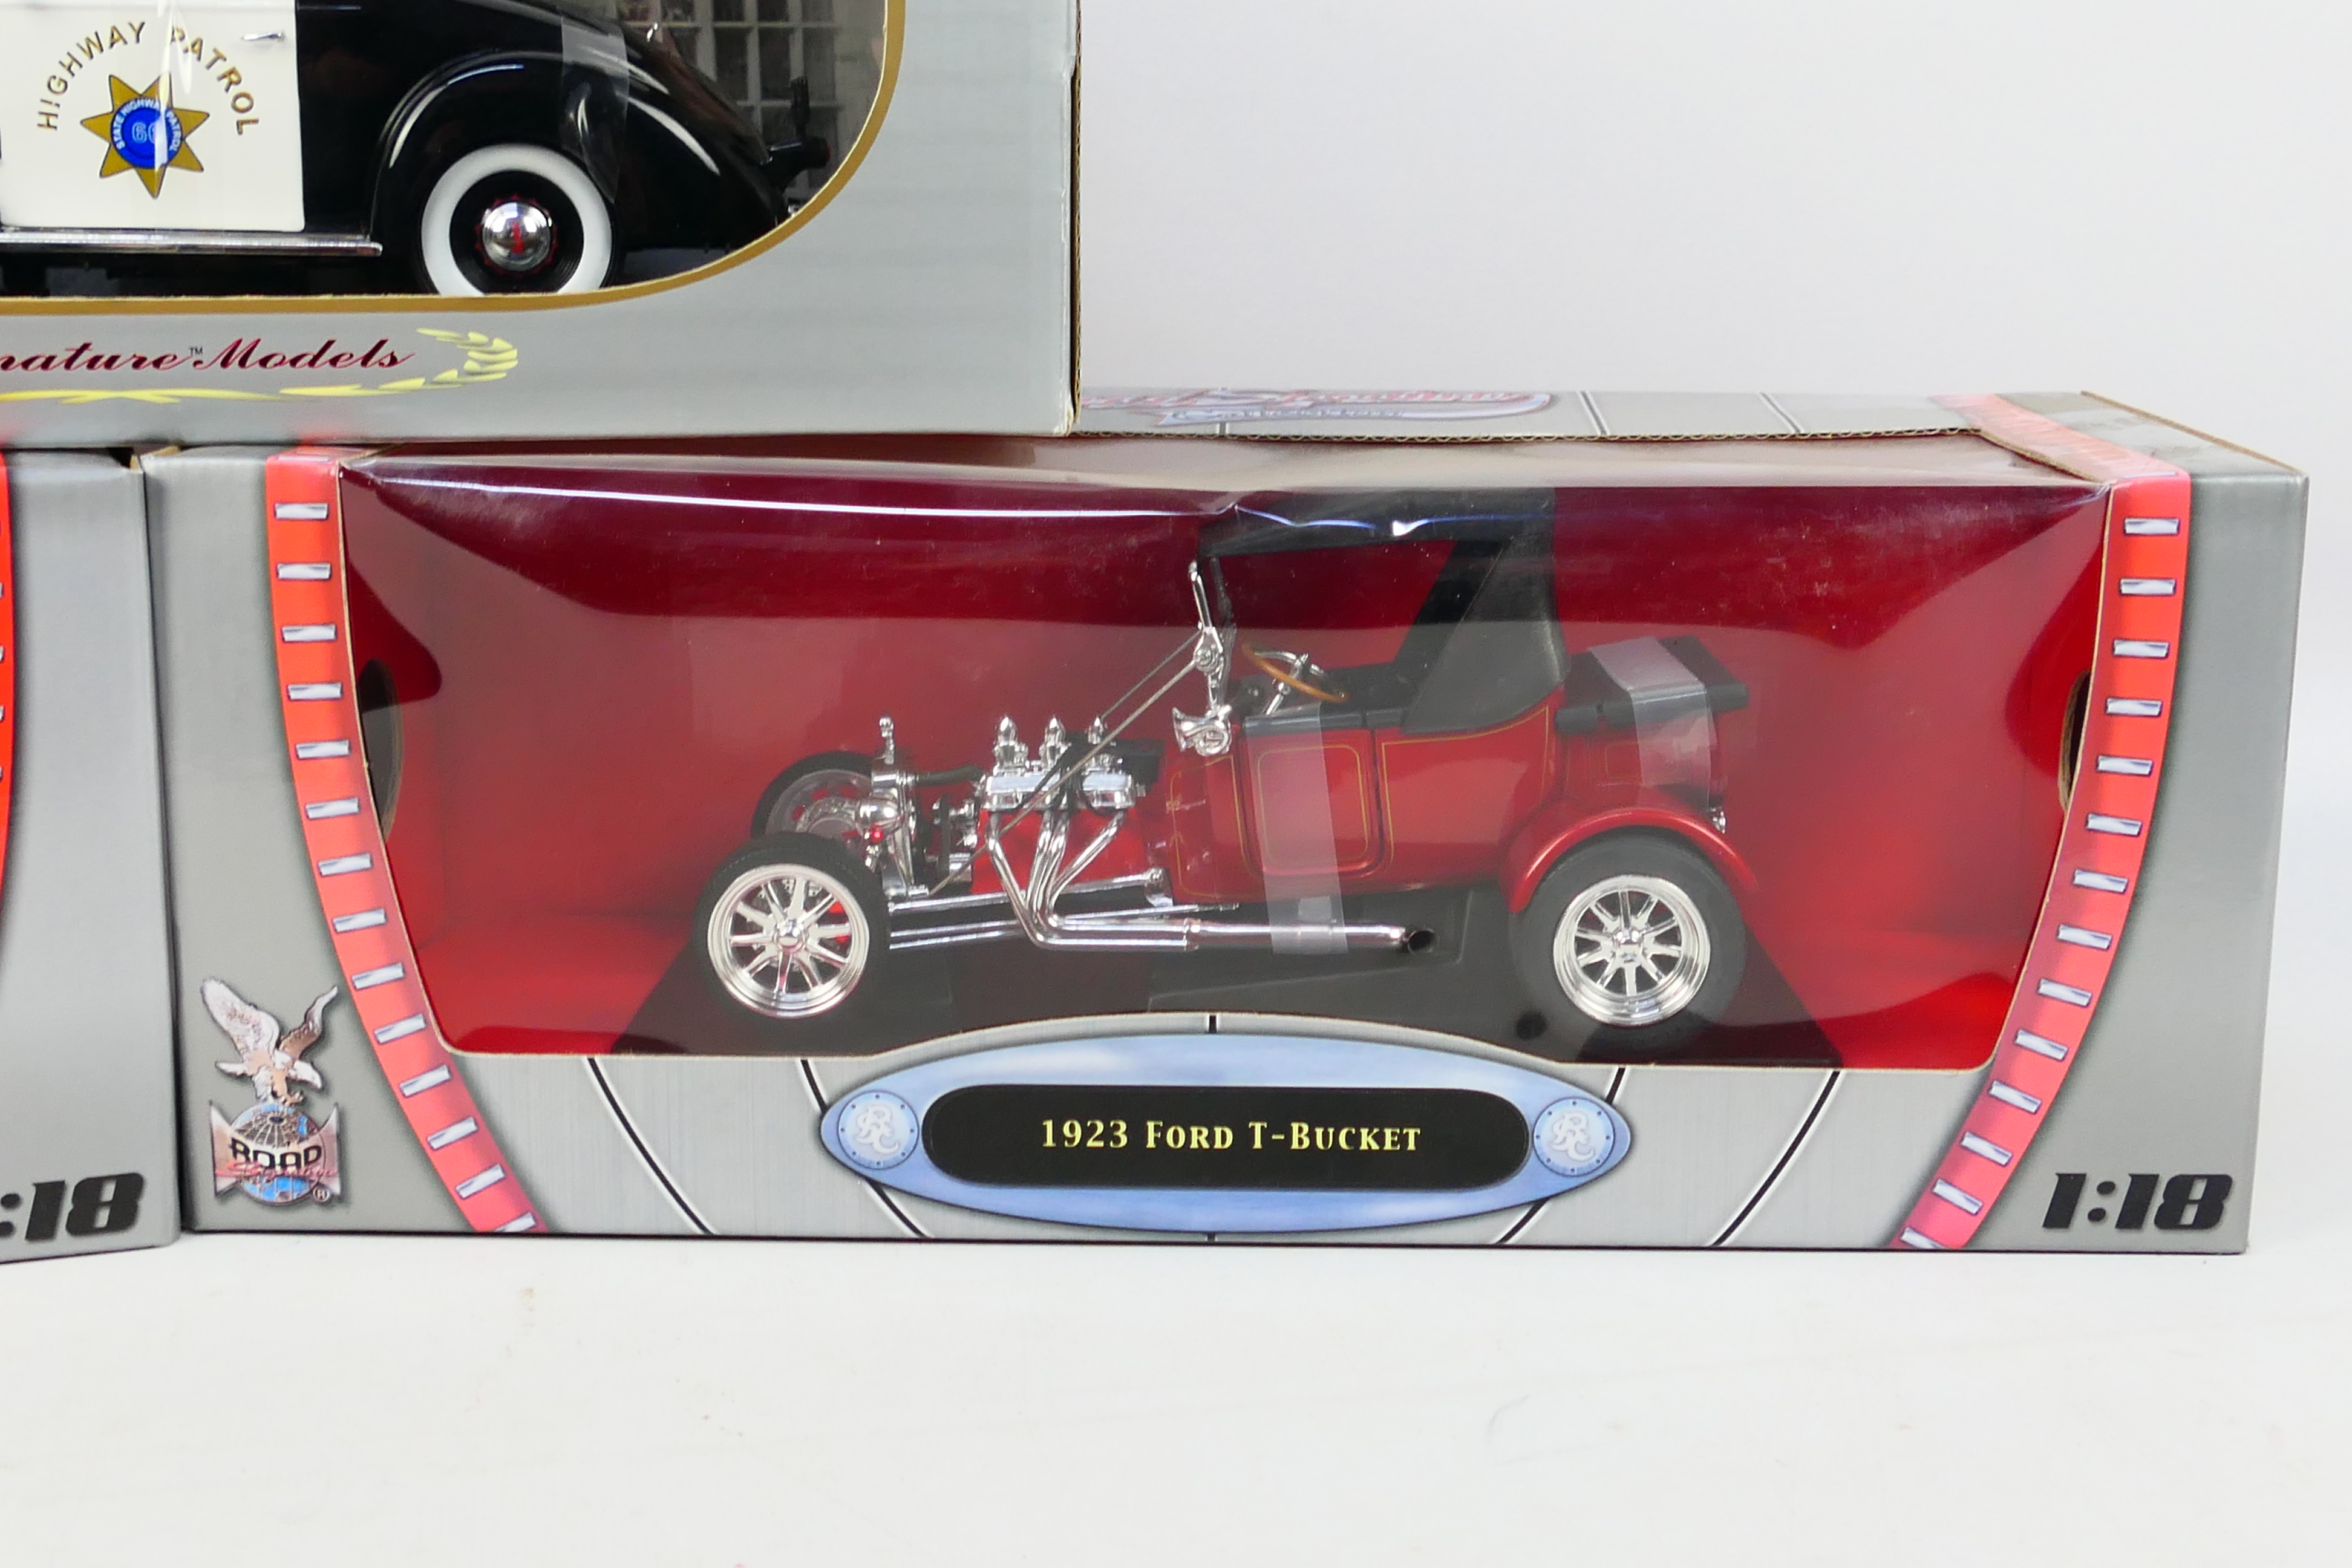 Road Signature - Signature Models - Three boxed diecast 1:18 scale model cars. - Image 4 of 4